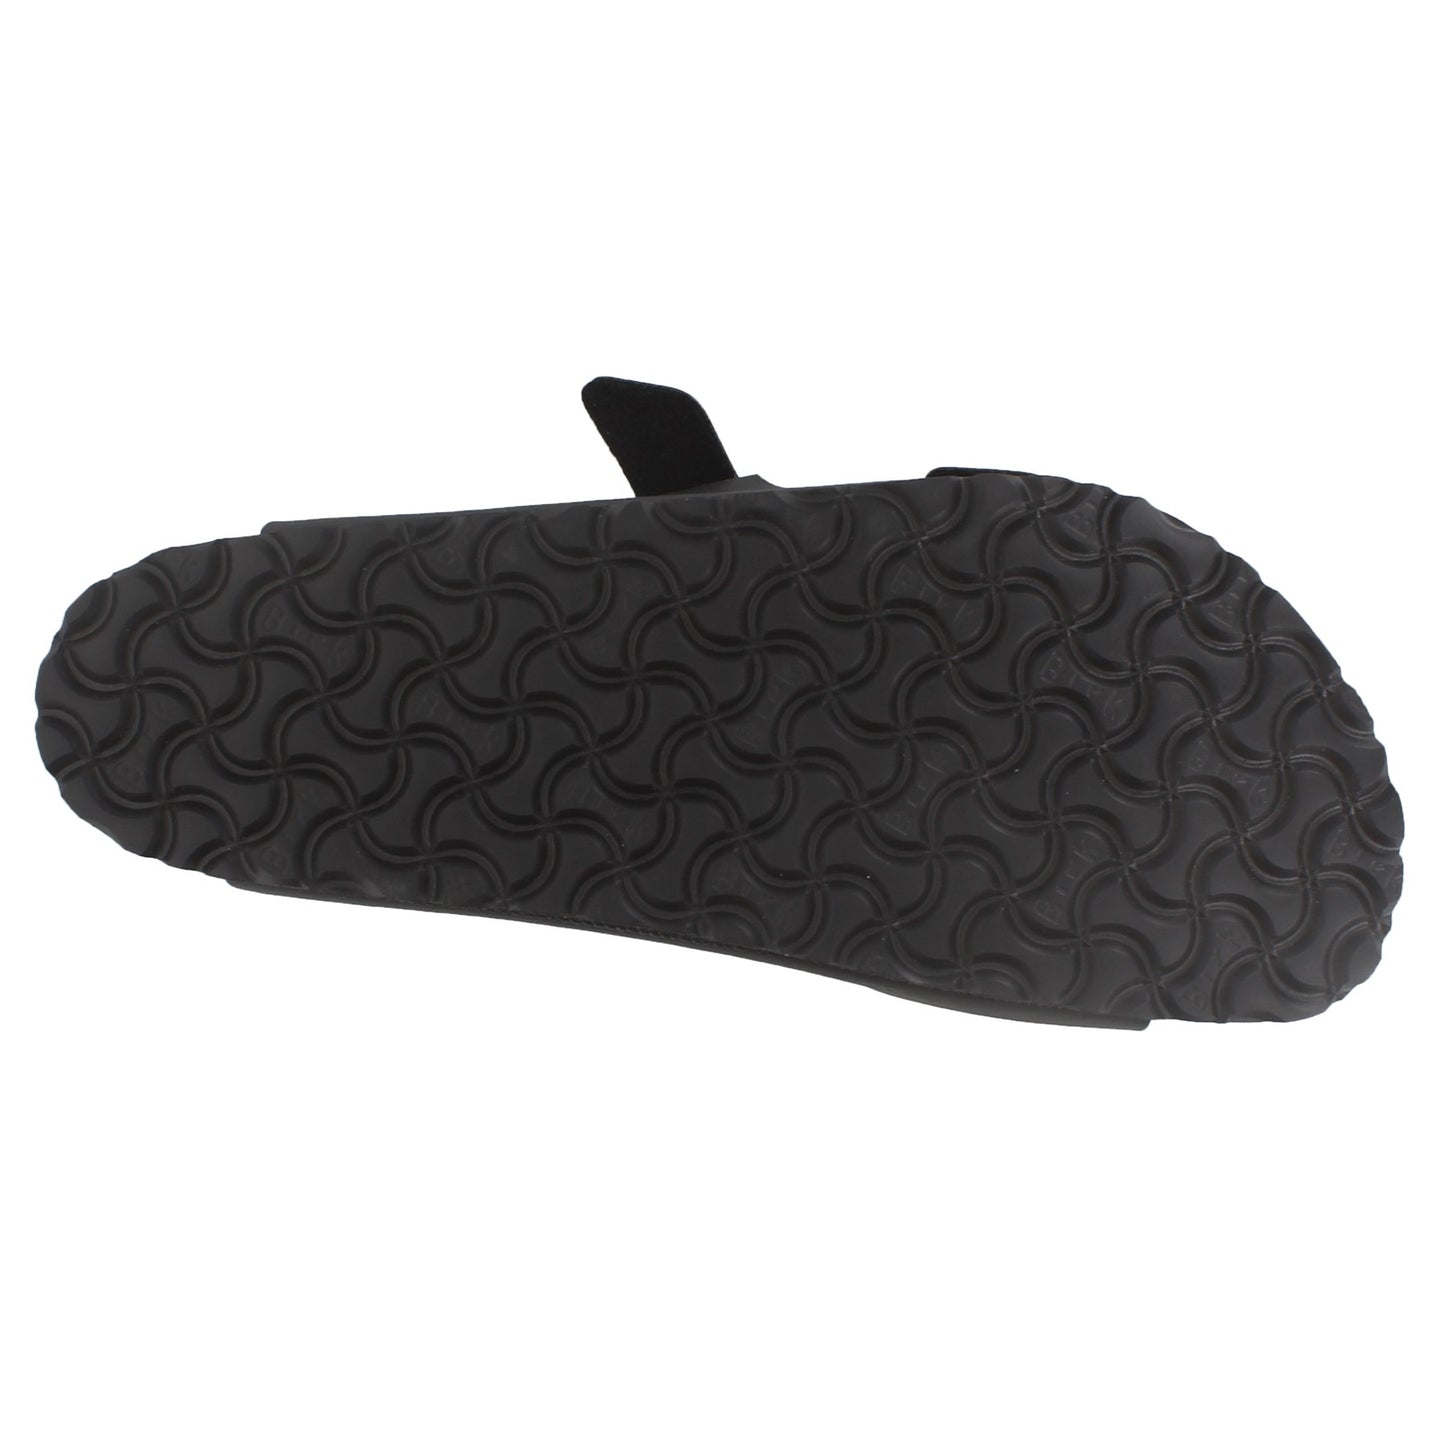 Peltz Shoes  Men's Birkenstock Arizona Birko Flor Sandal - Regular Width BLACK 5179 1 R